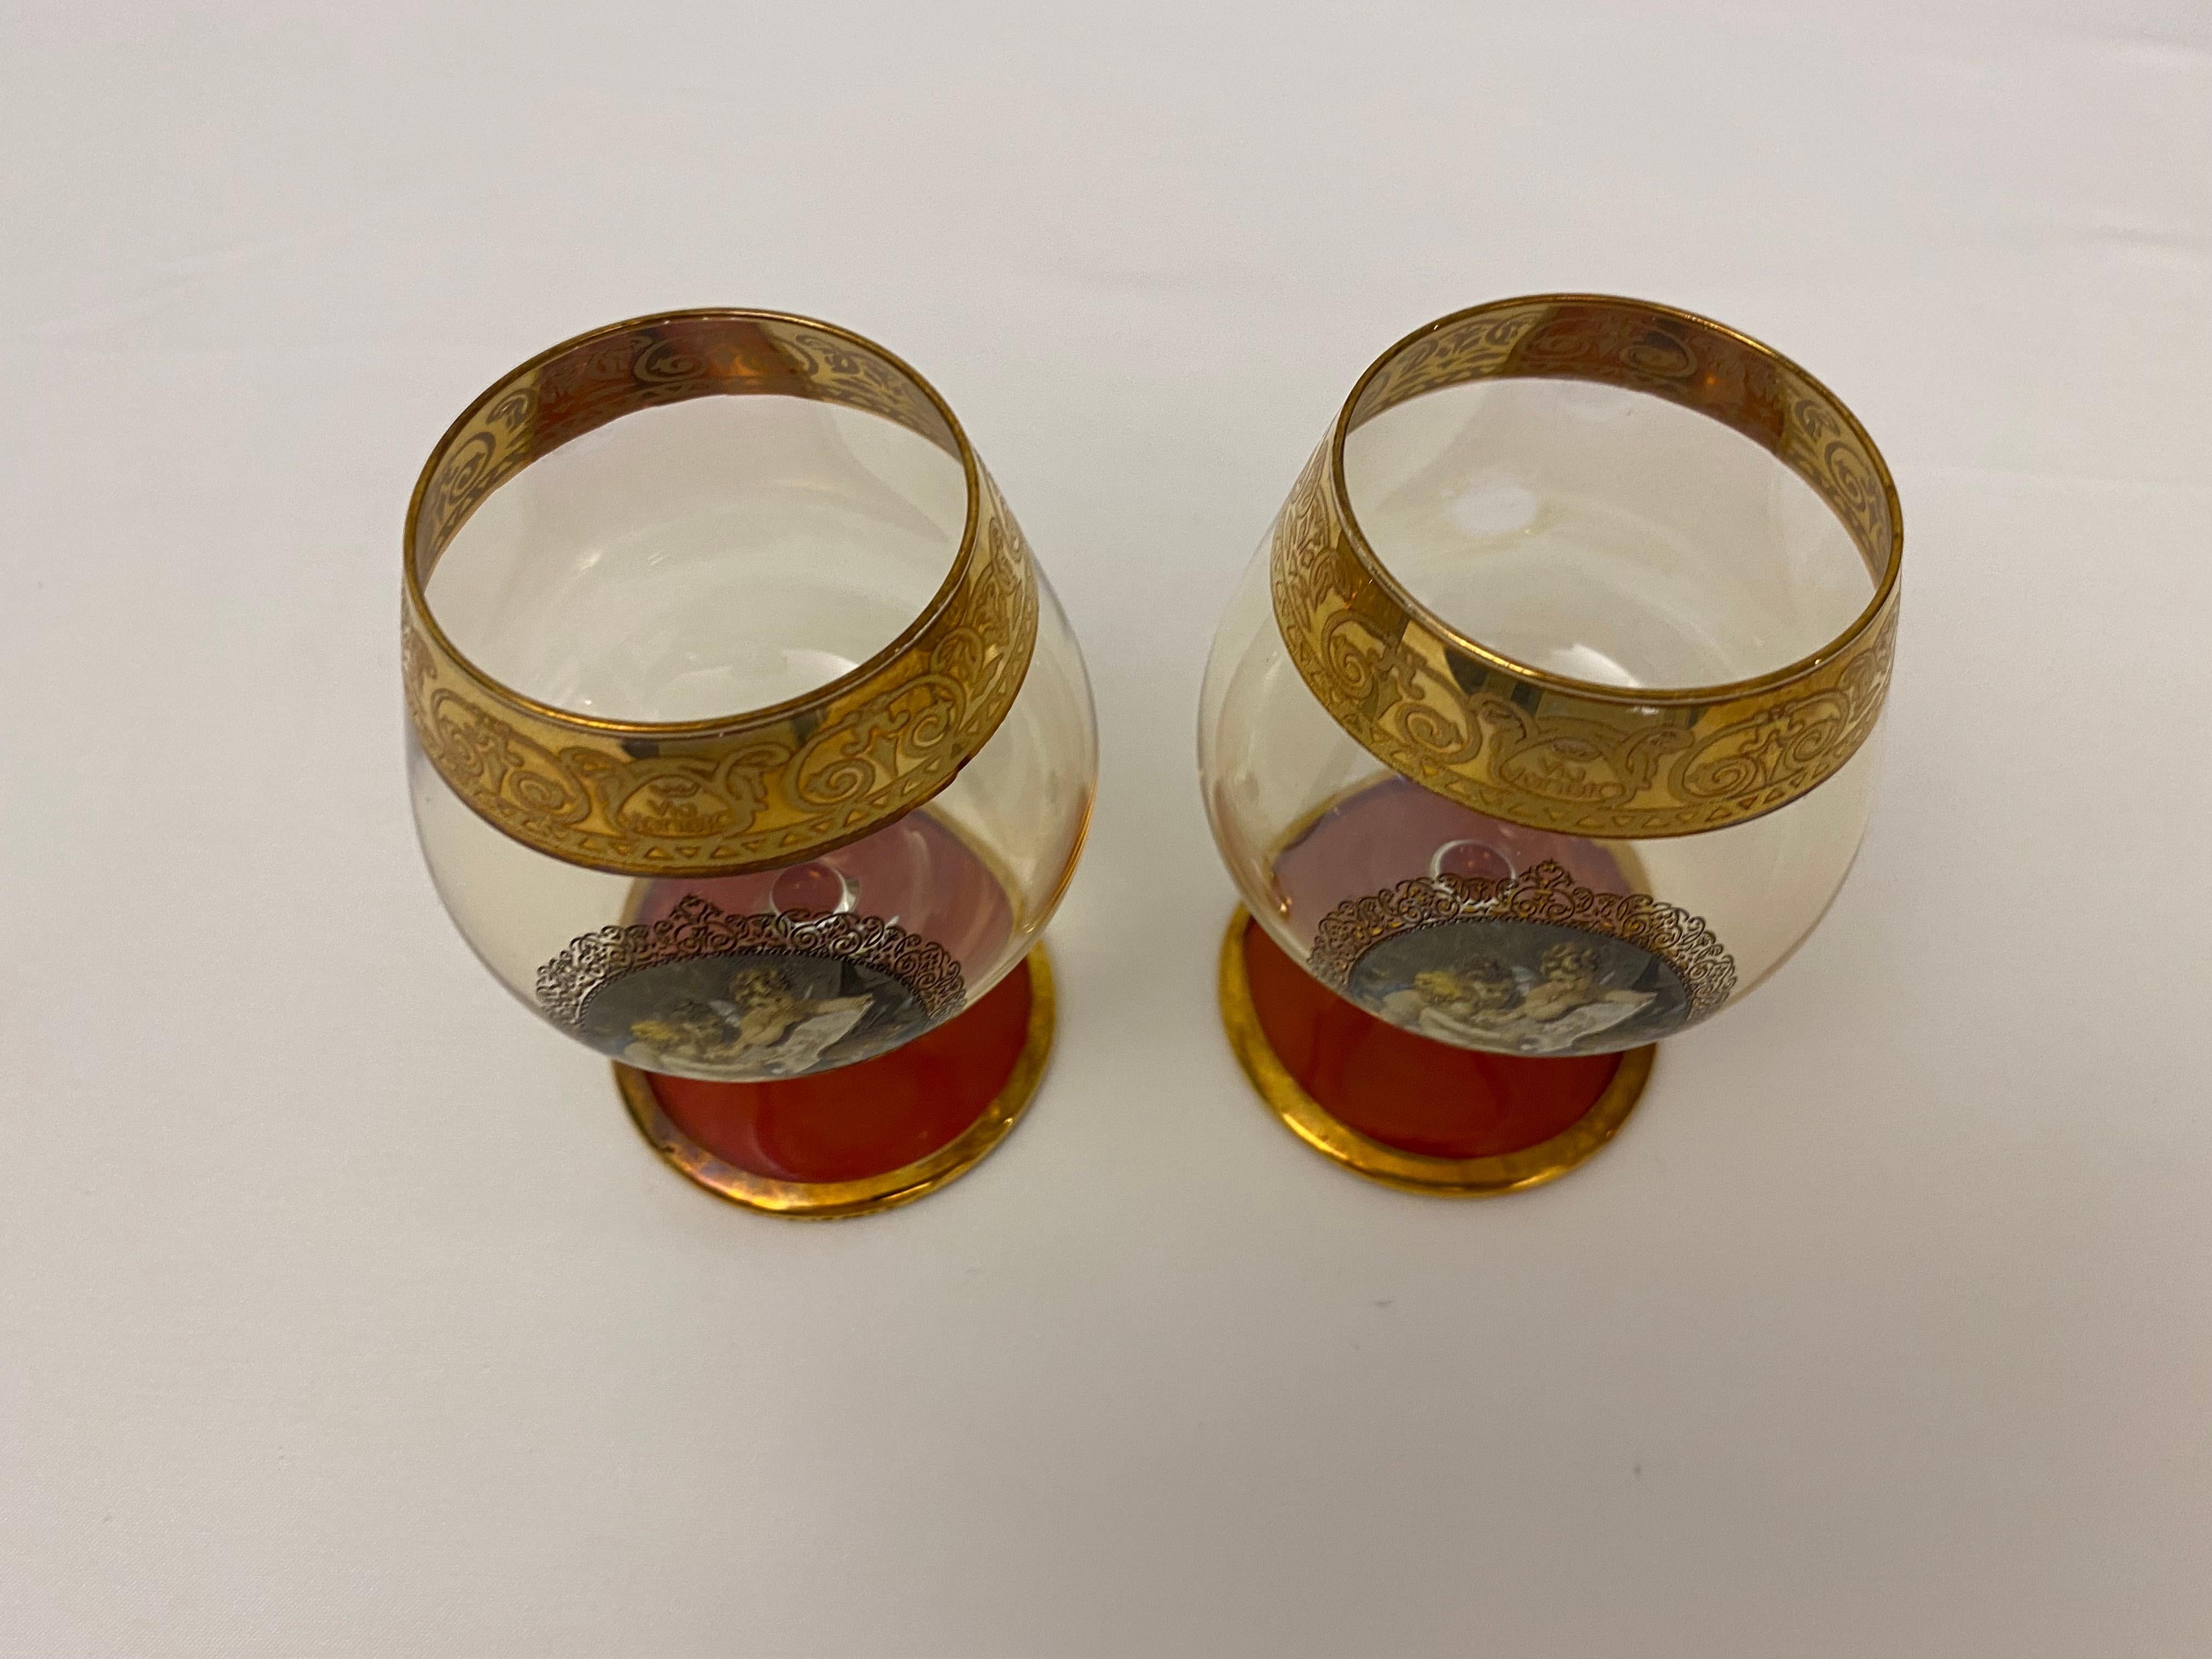 Italian Set of 2 Via Veneto Cordial, Cognac or Liquor Glasses by Spiegelau For Sale